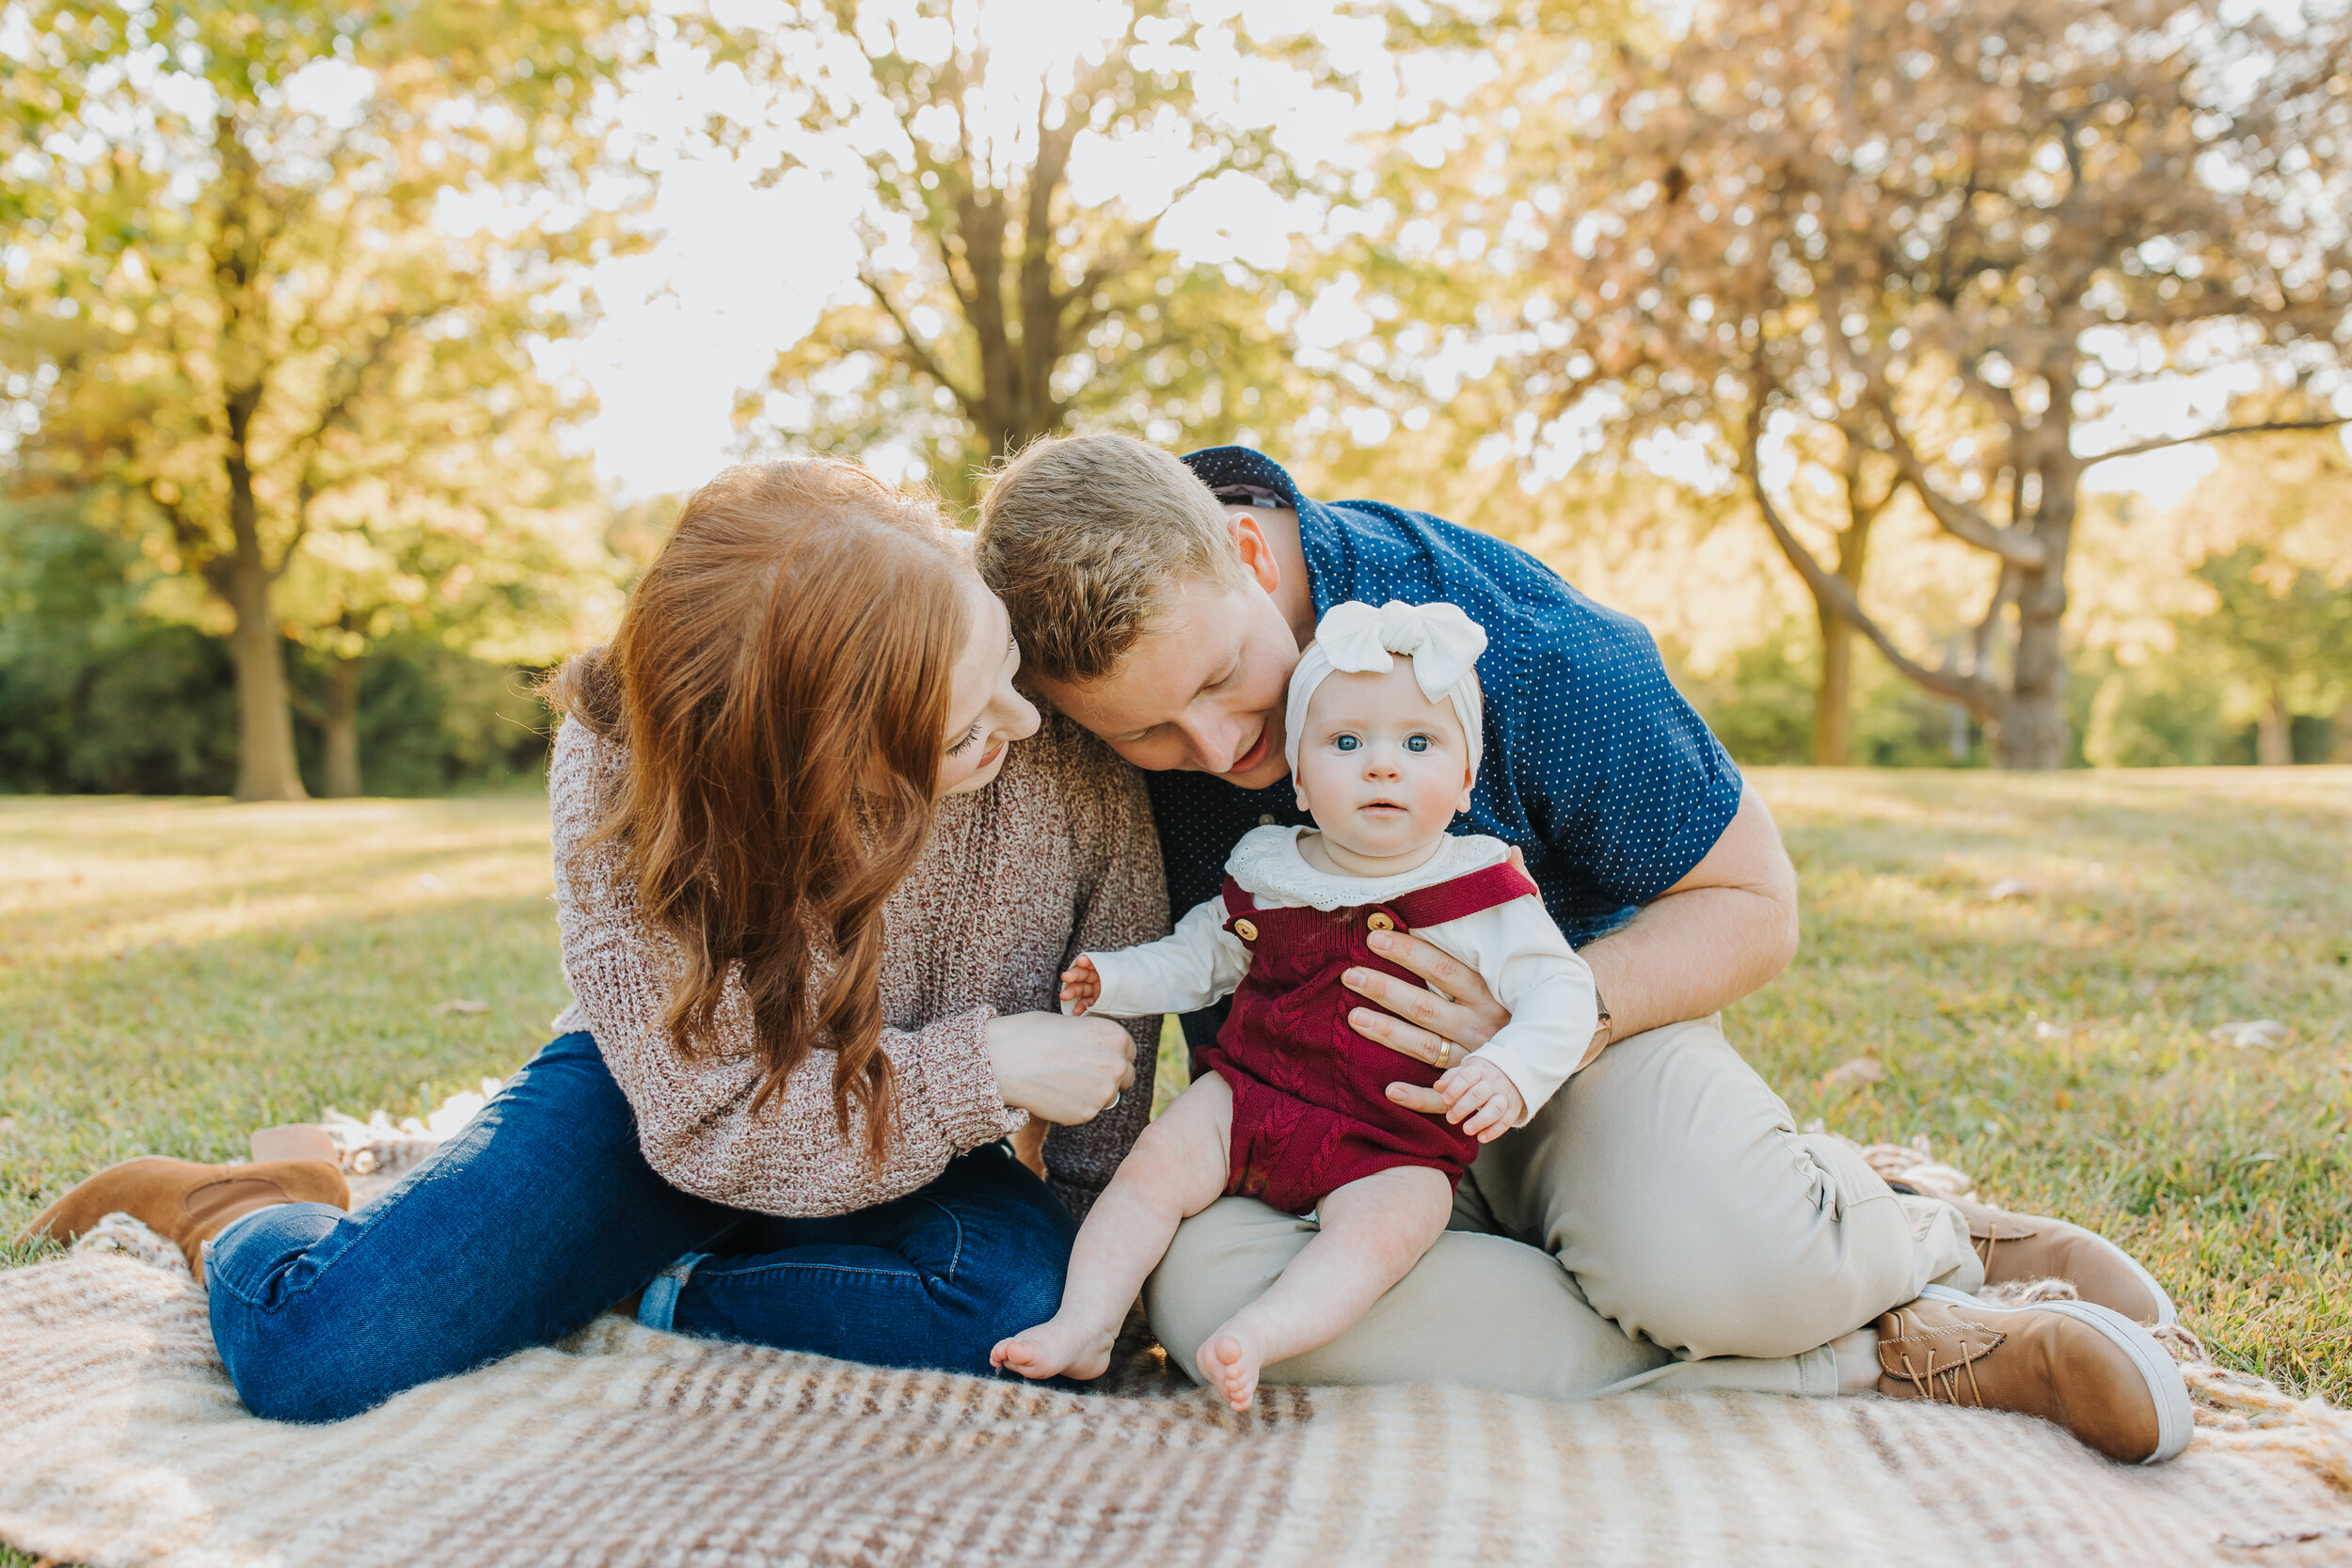 Unger Family Photos 2020 - Nathaniel Jensen Photography - Omaha Nebraska Family Photographer-61.jpg